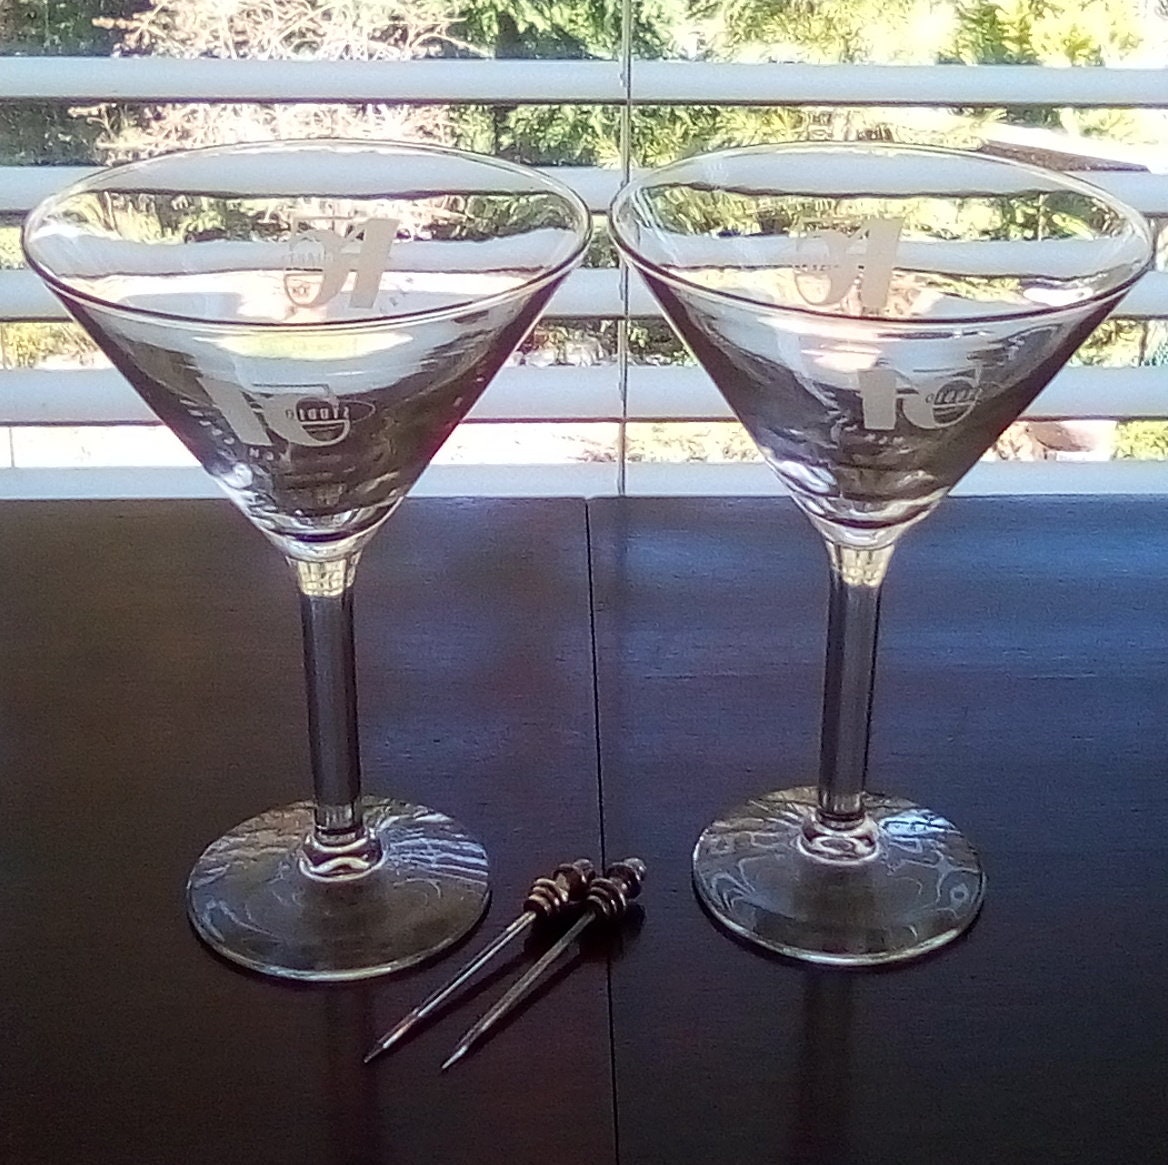  Personalized Martini Glass Set of 2, 9.25 oz